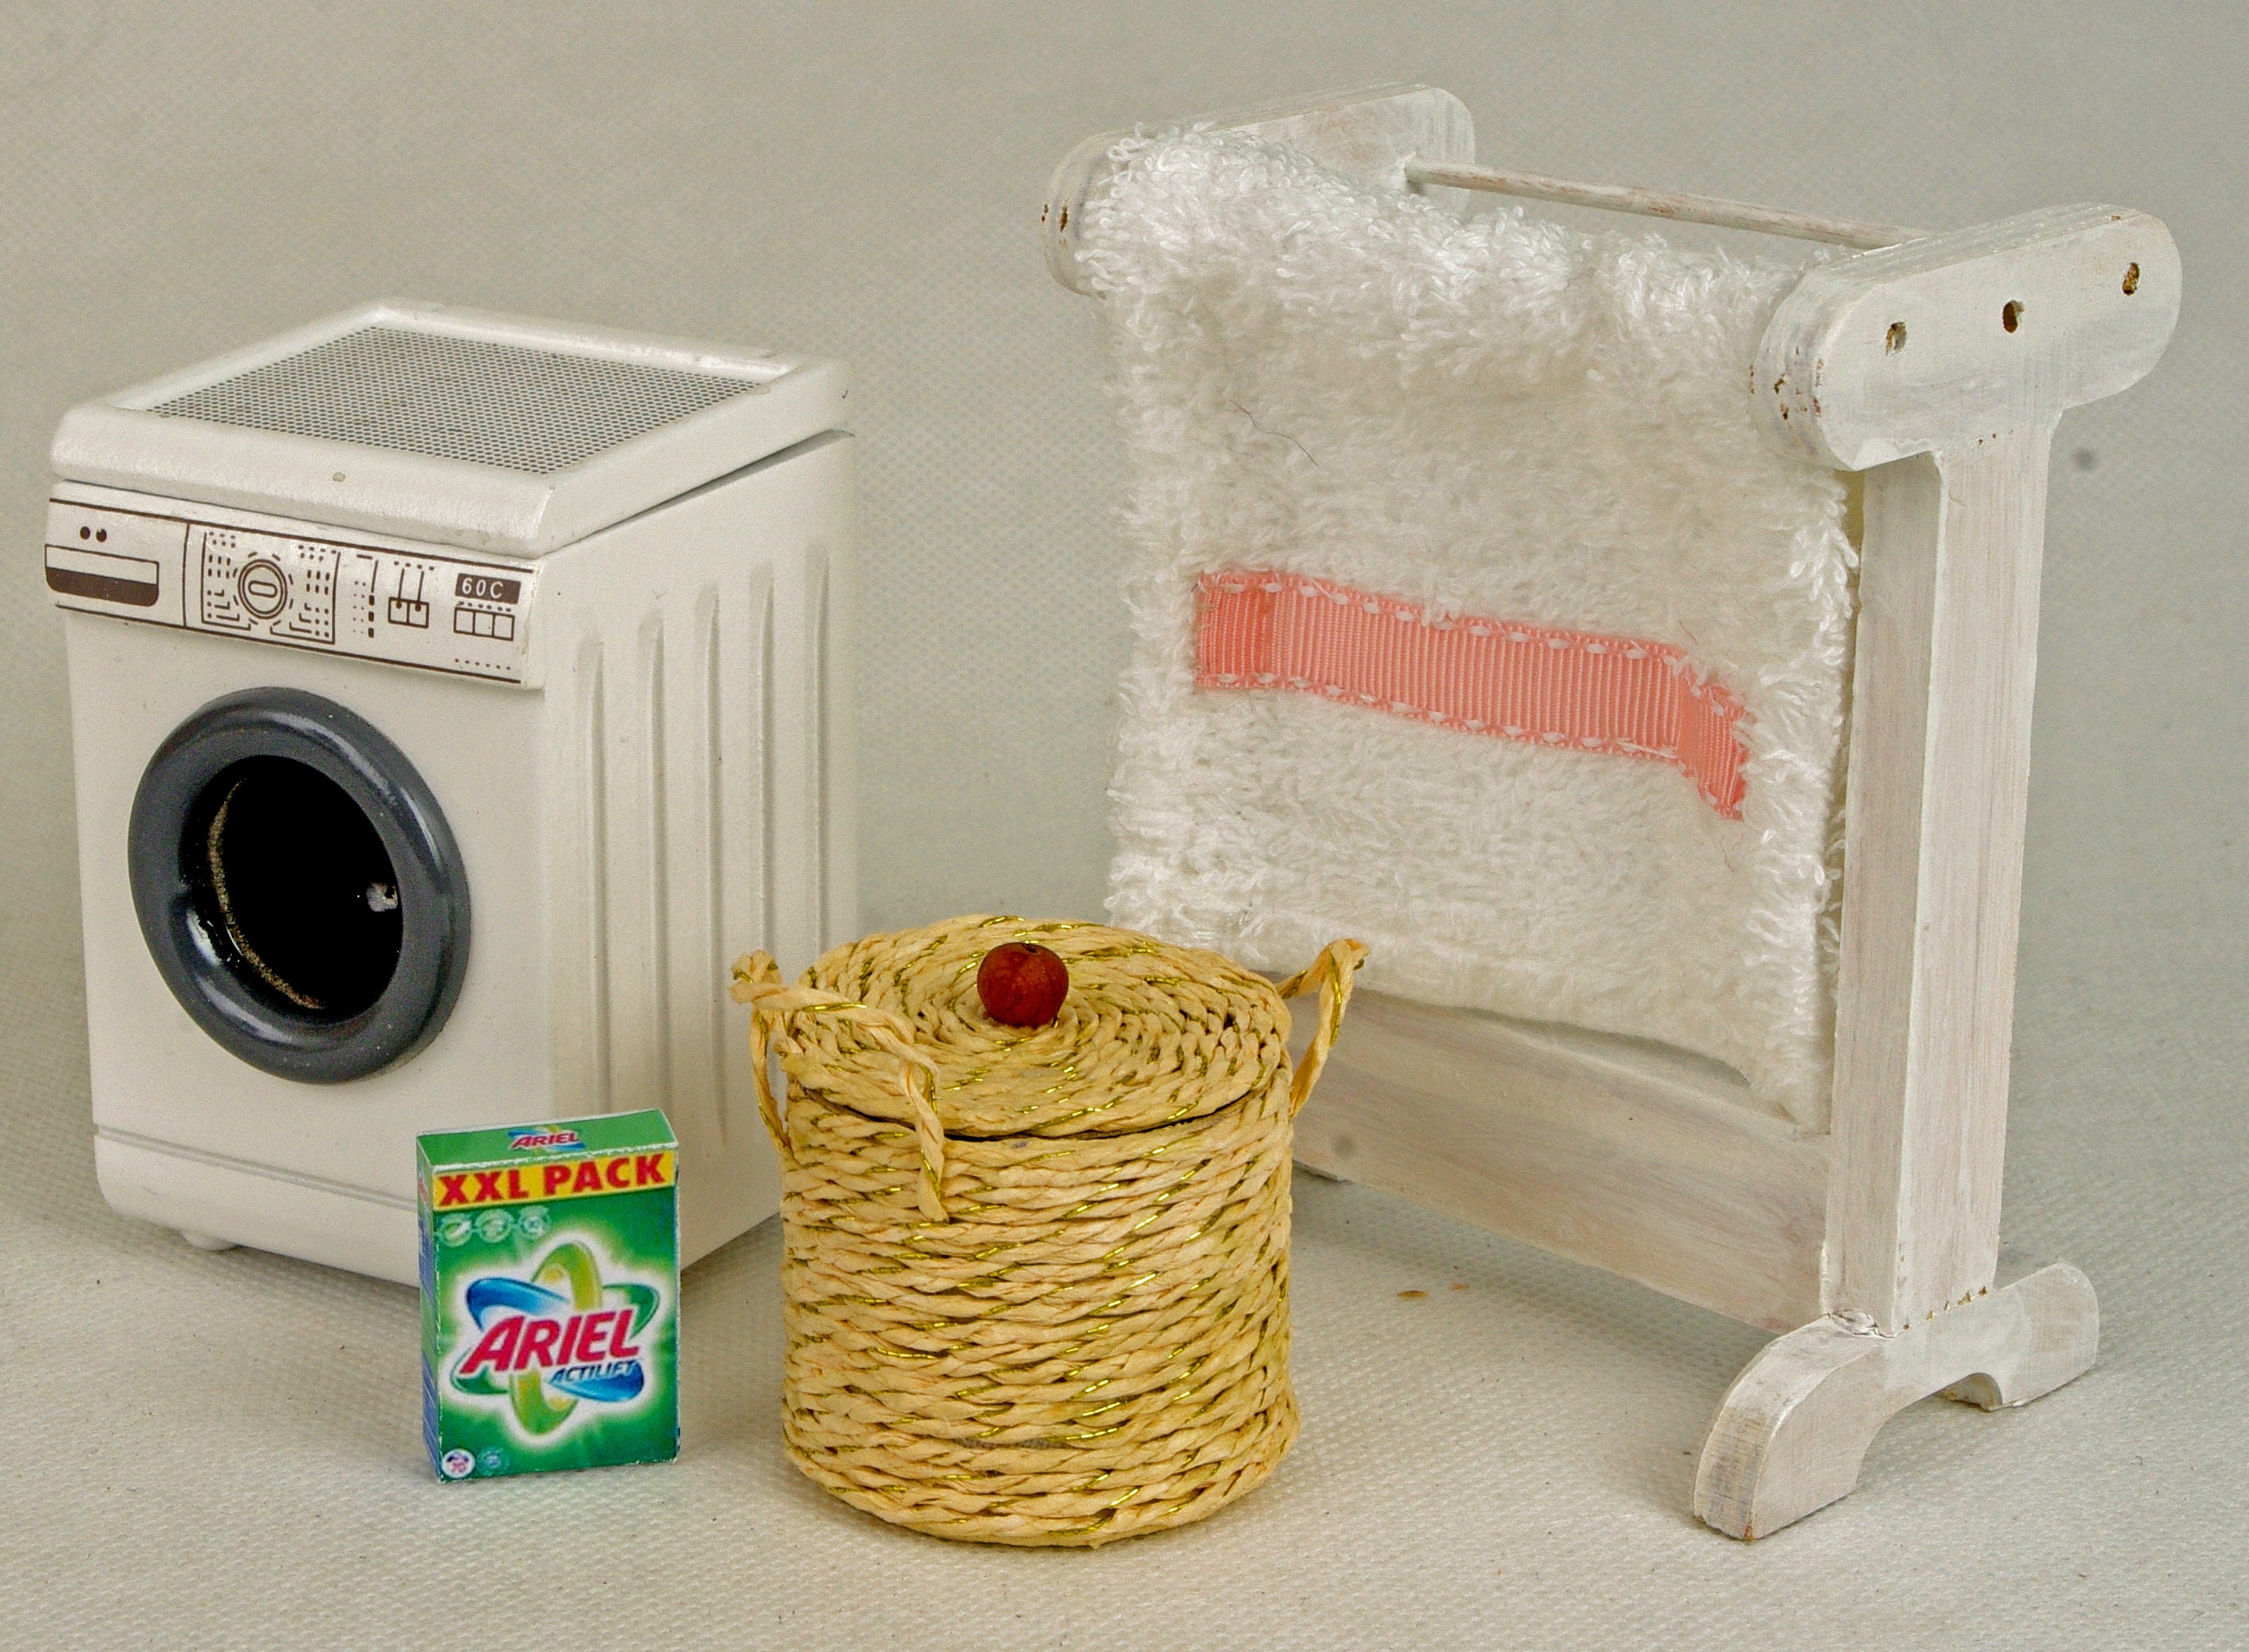 MINIATURE Dollhouse Laundry Washer and Dryer / Mini Farmhouse